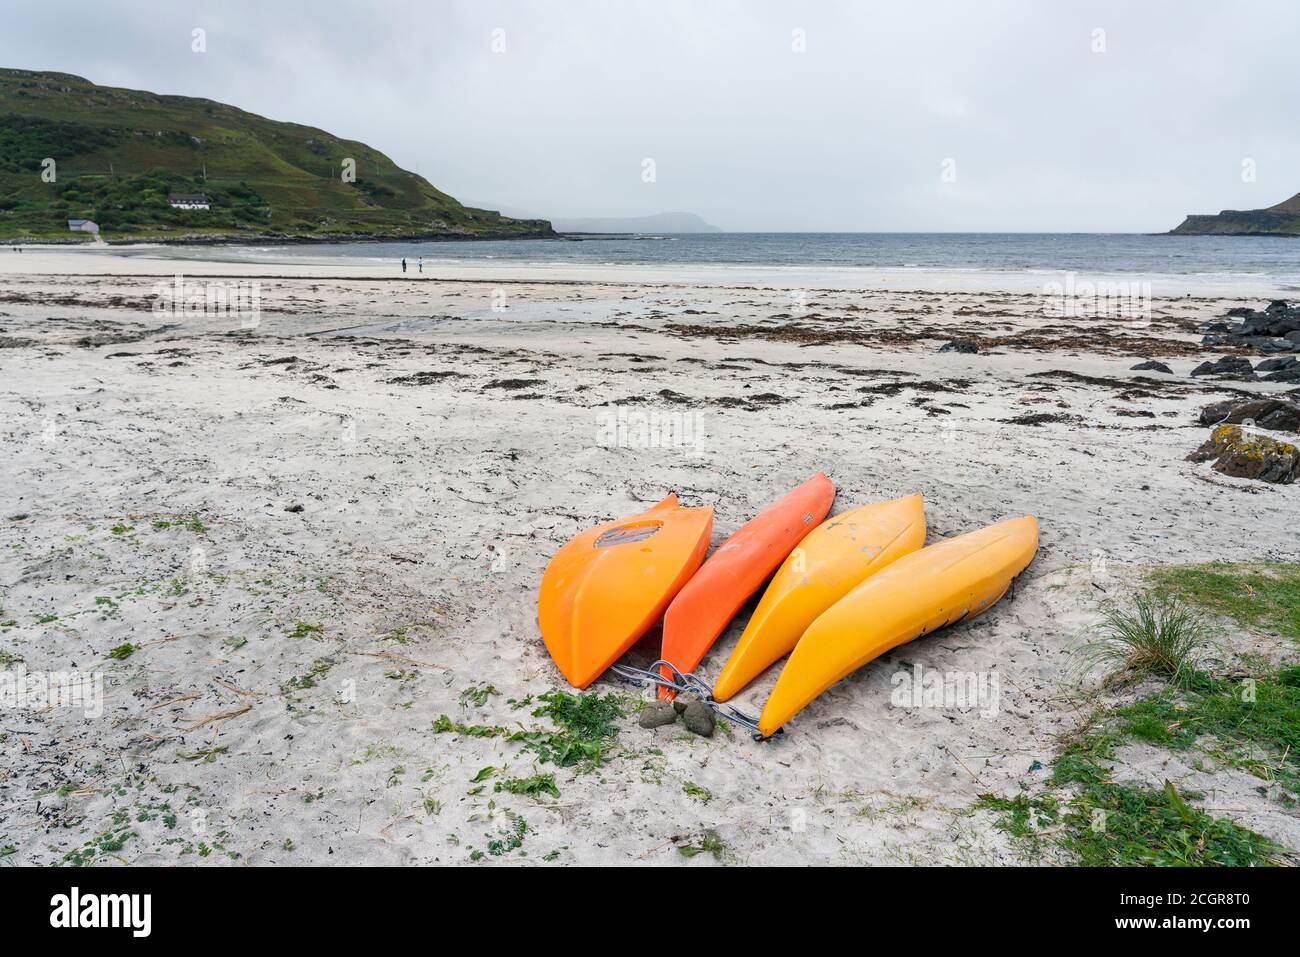 Orange kayaks on beach at Calgary on island of Mull, Argyll and Bute, Scotland, UK Stock Photo